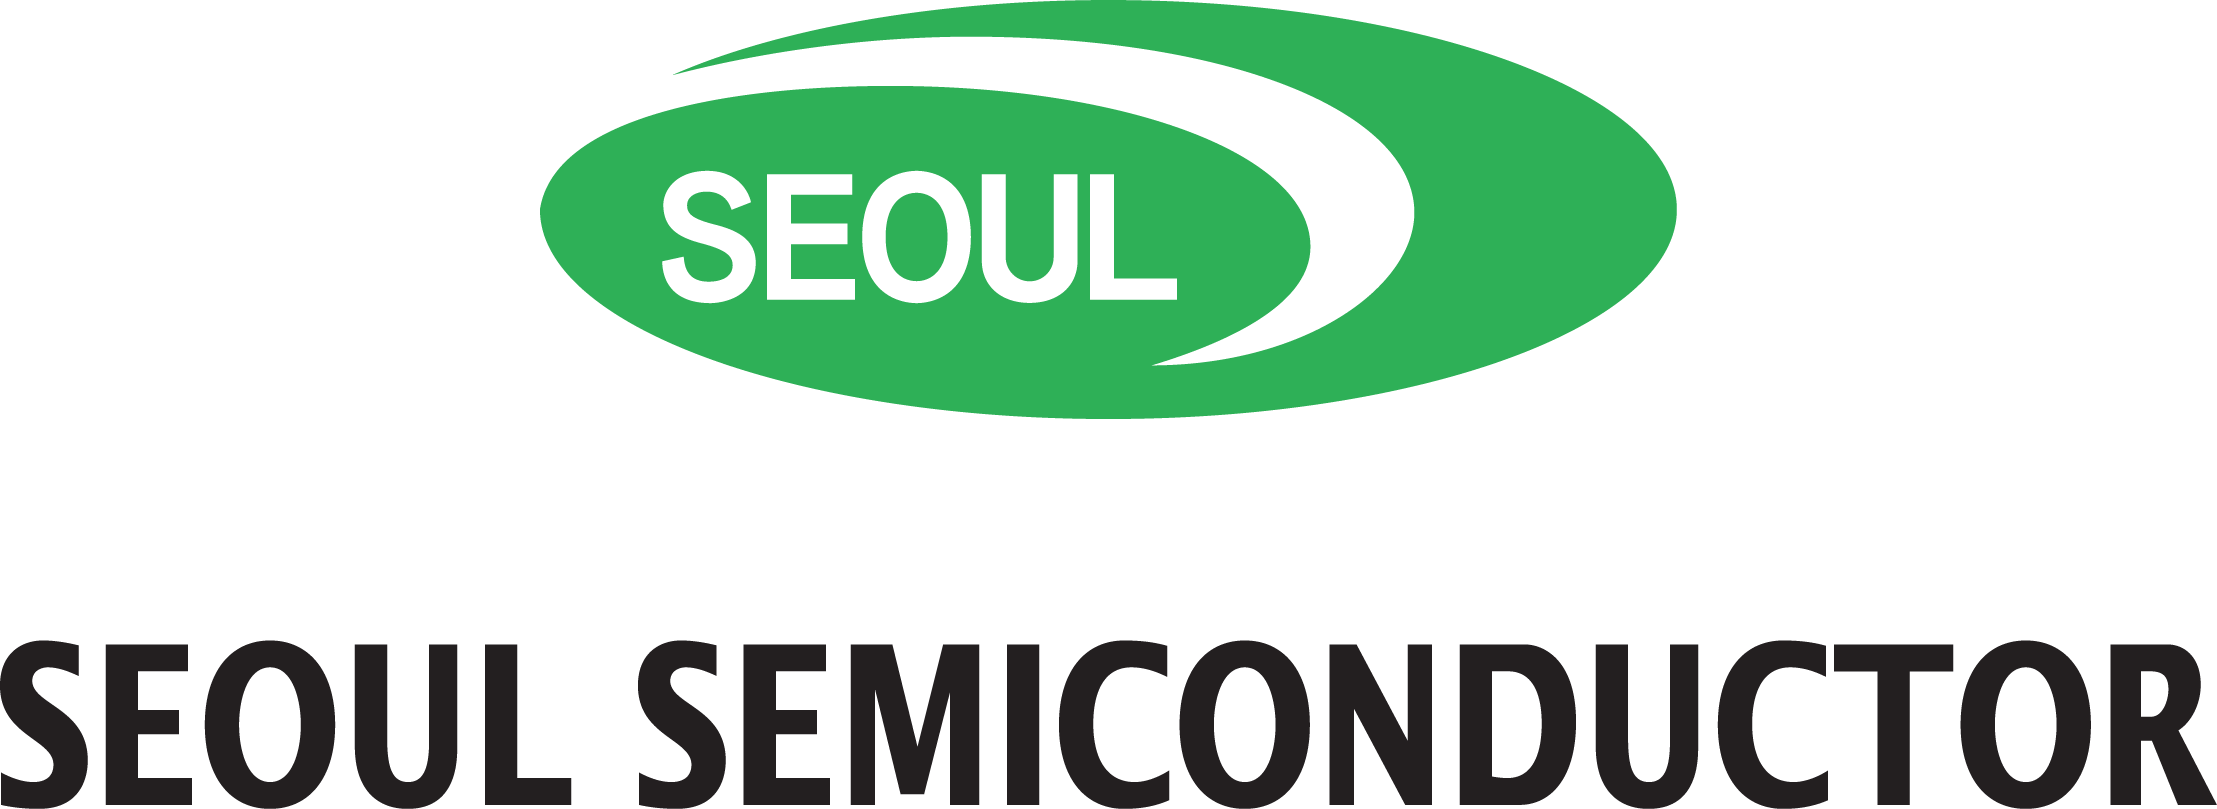 Seoul Semiconductor Inc. LOGO